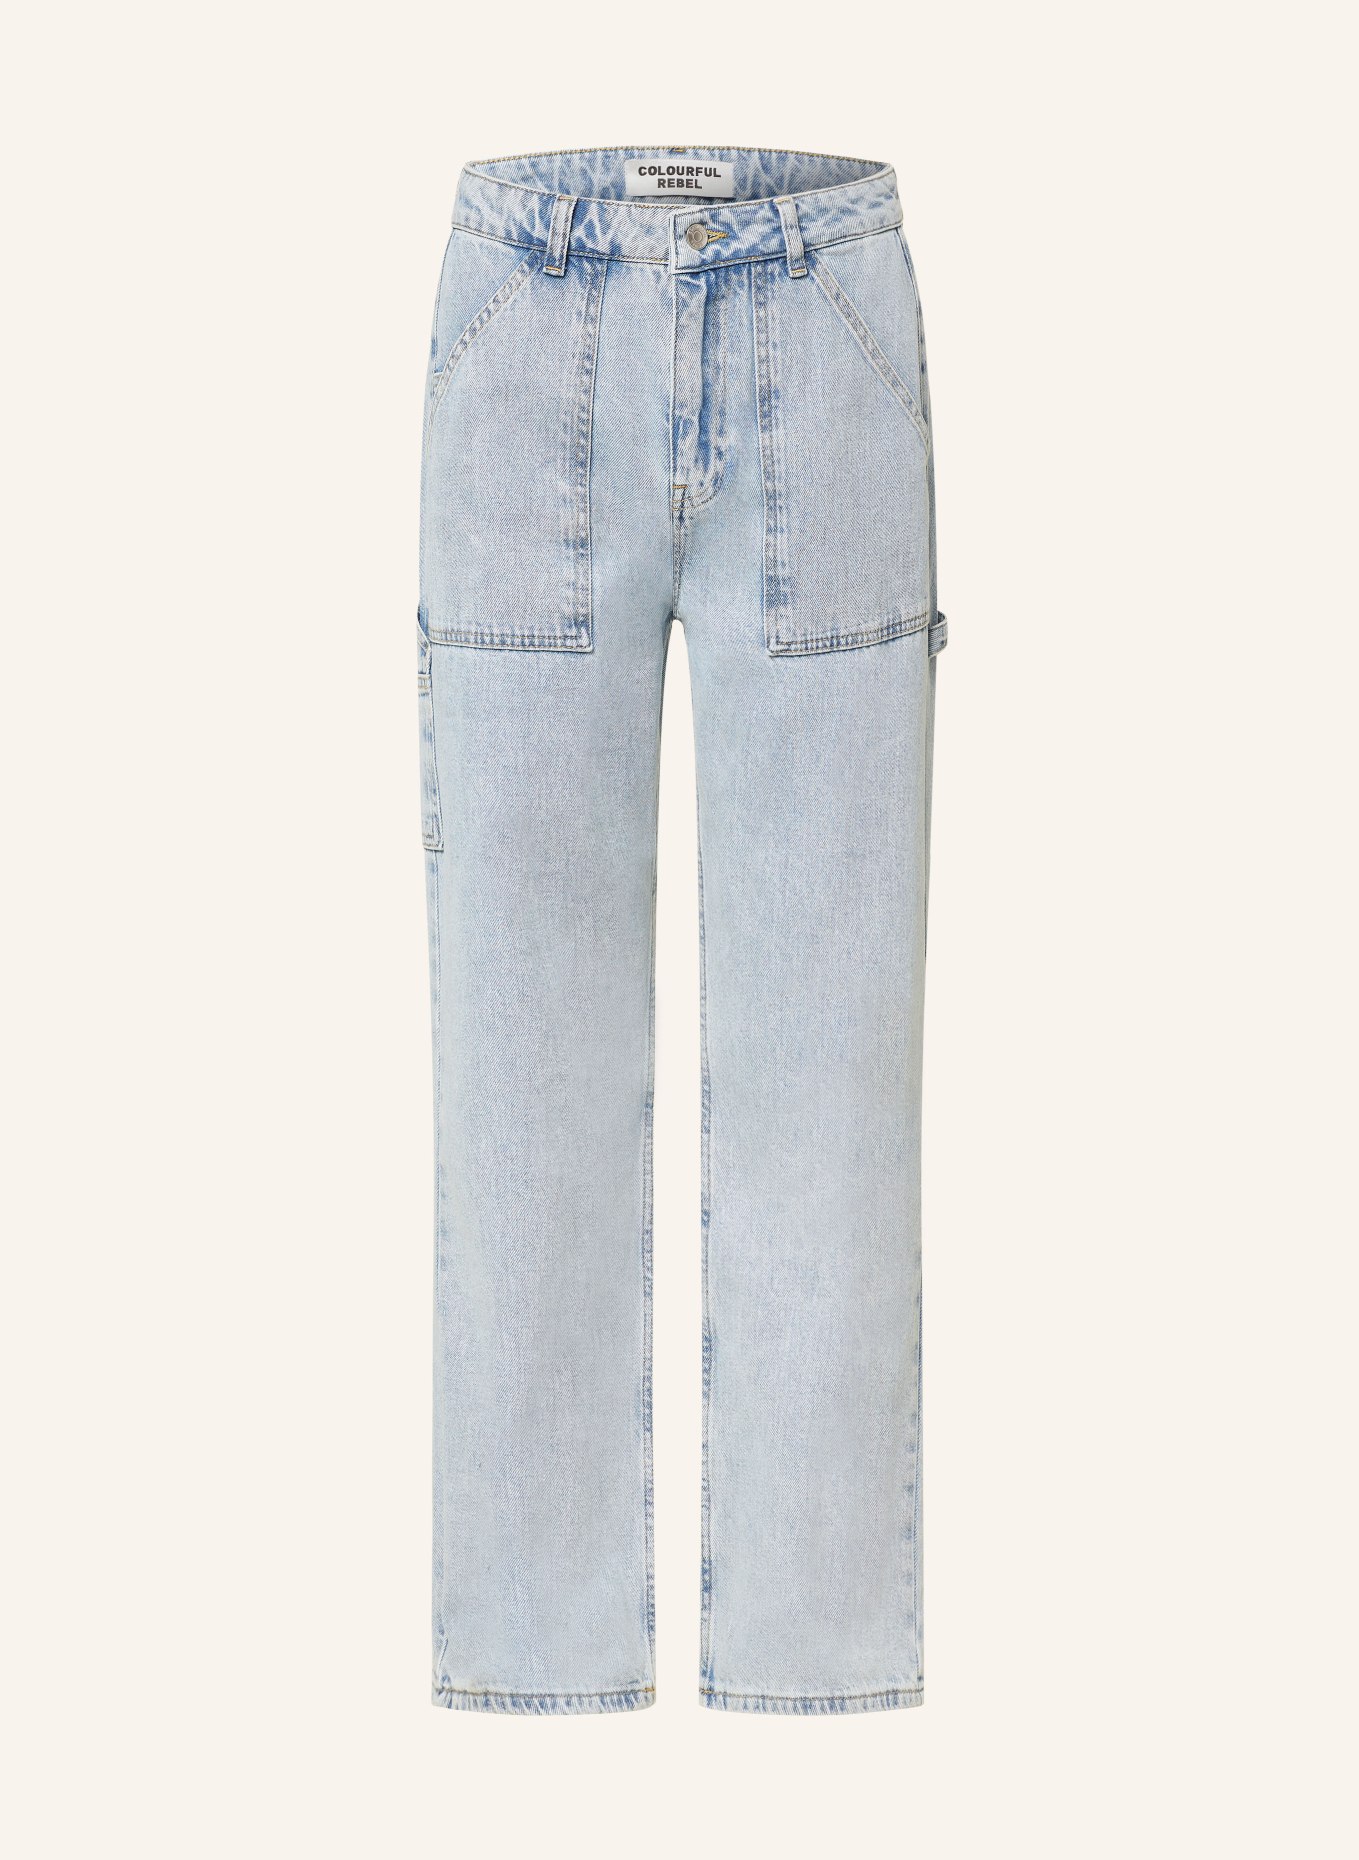 COLOURFUL REBEL Straight Jeans TINSLEY, Farbe: 564 Light Blue Denim (Bild 1)